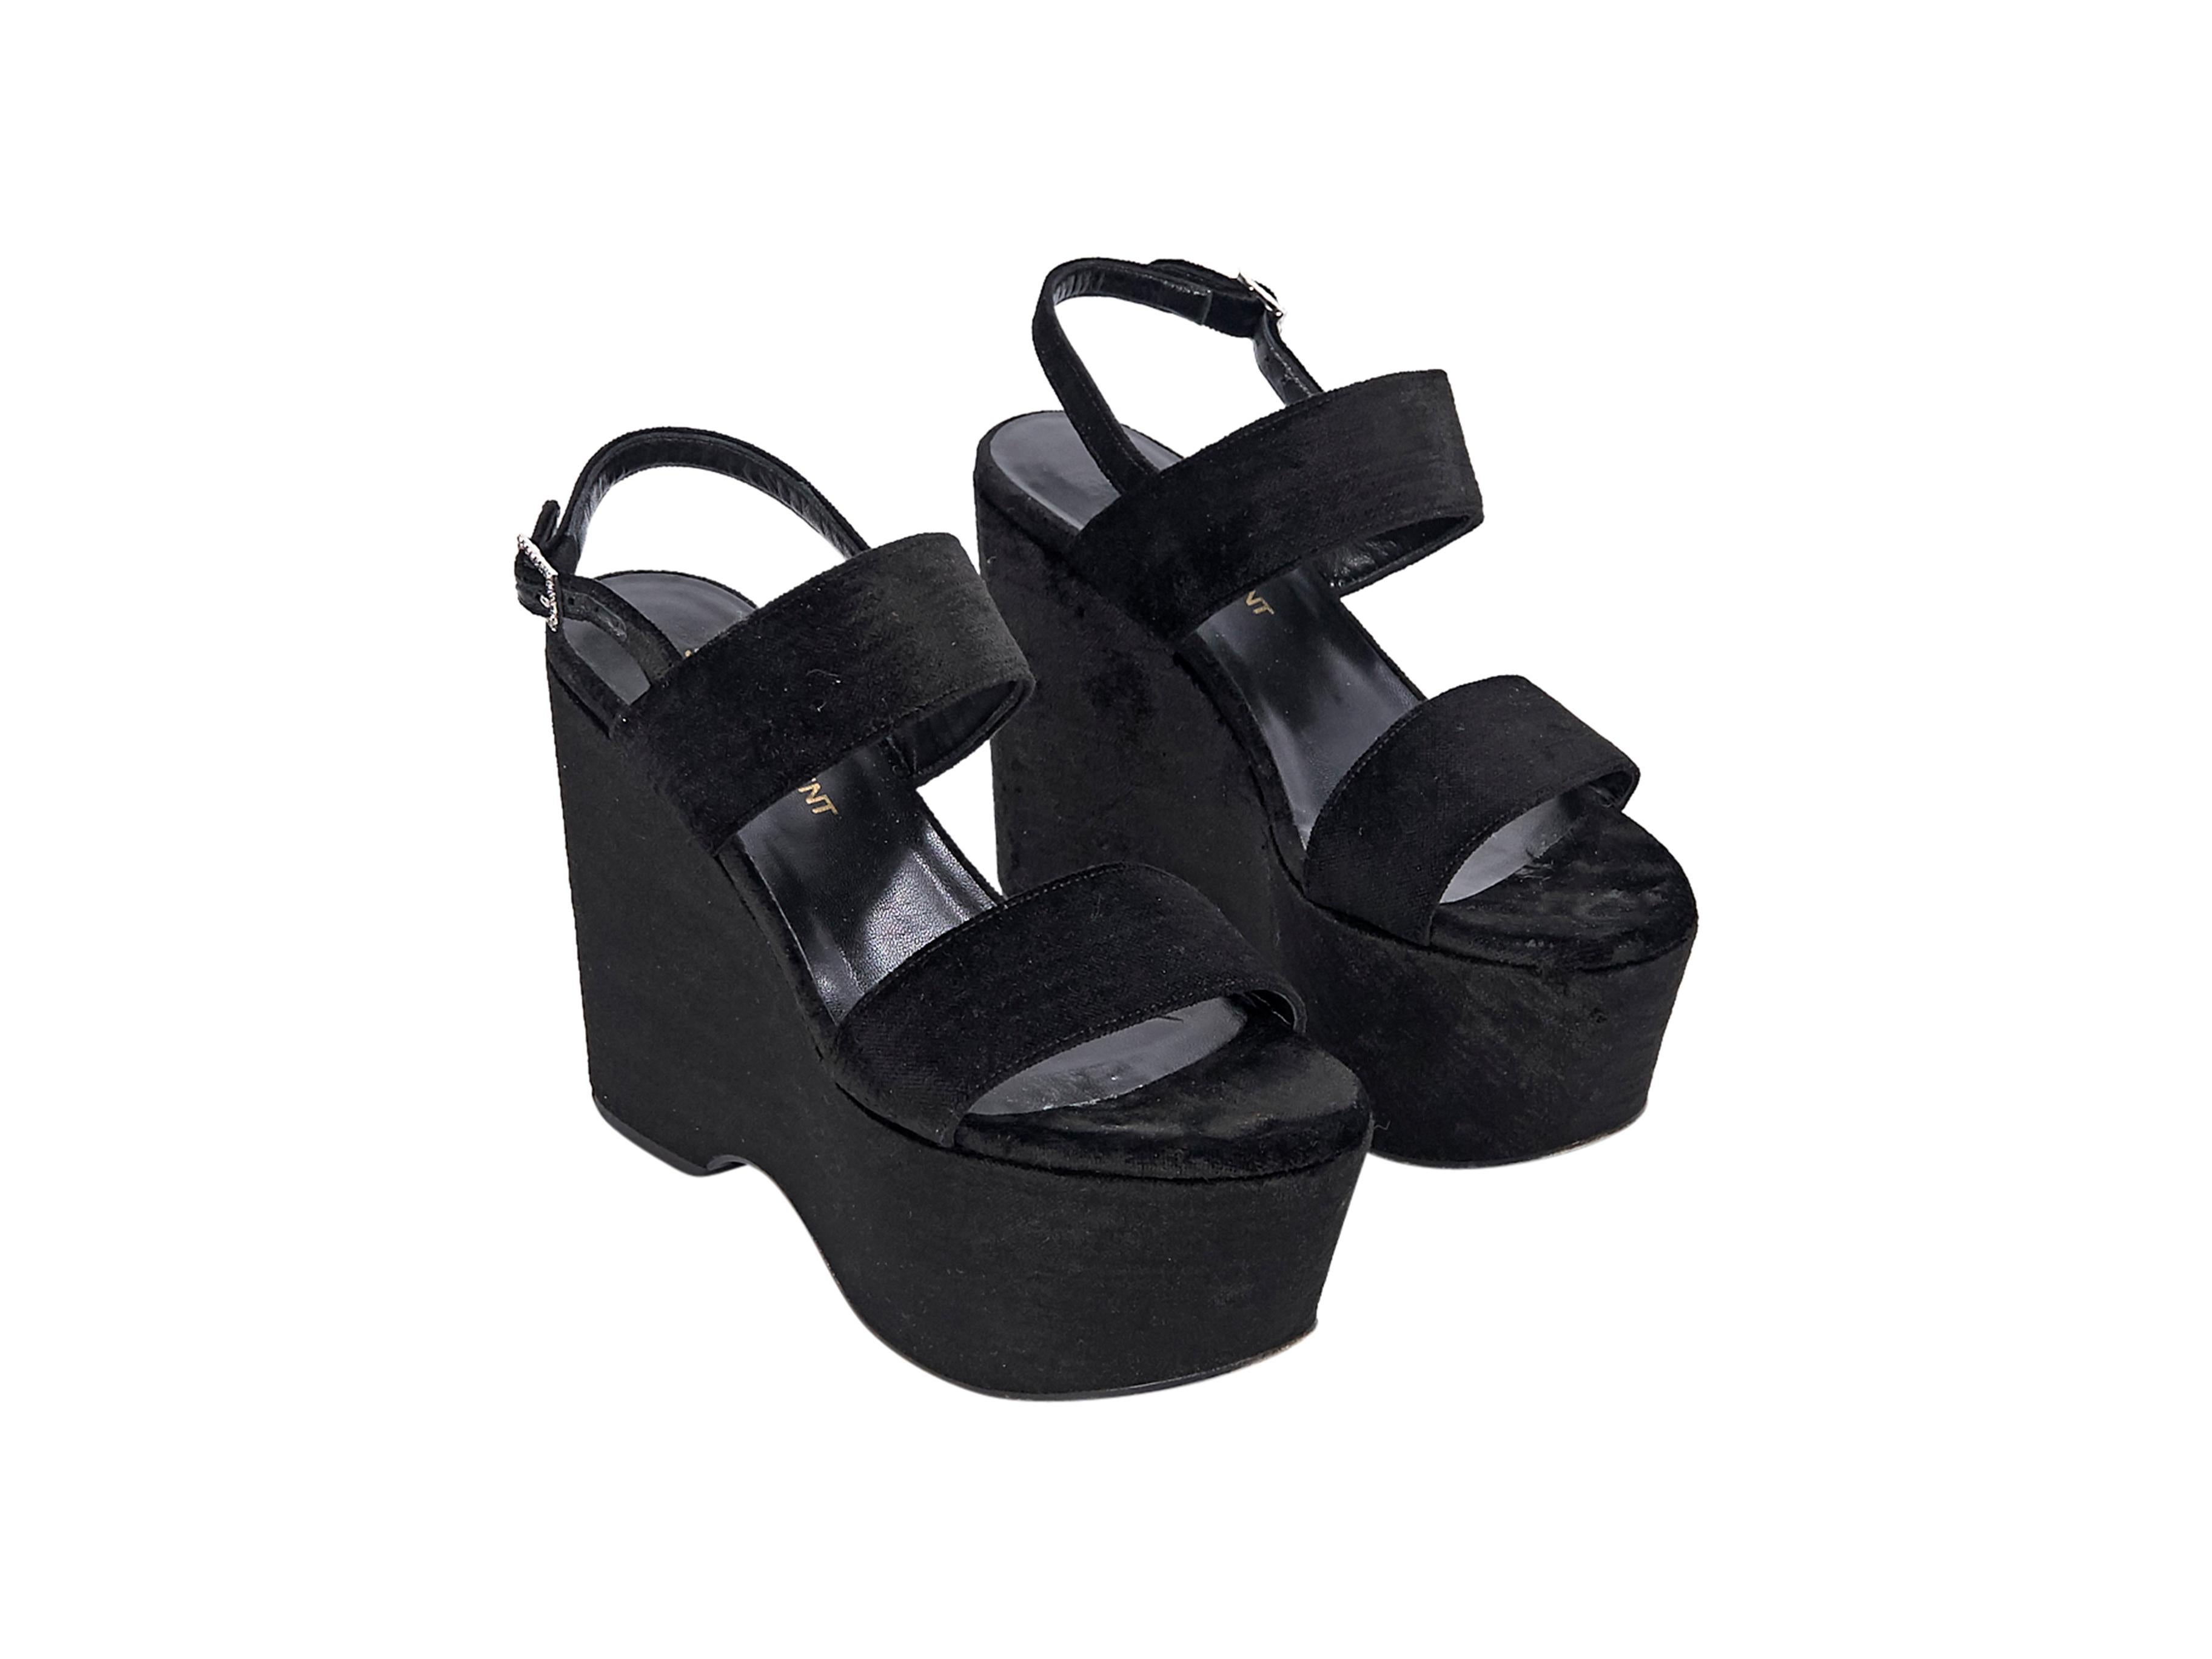 Product details:  Black velvet wedge sandals by Saint Laurent.  Adjustable slingback strap.  Open toe.  Towering wedge design.  5